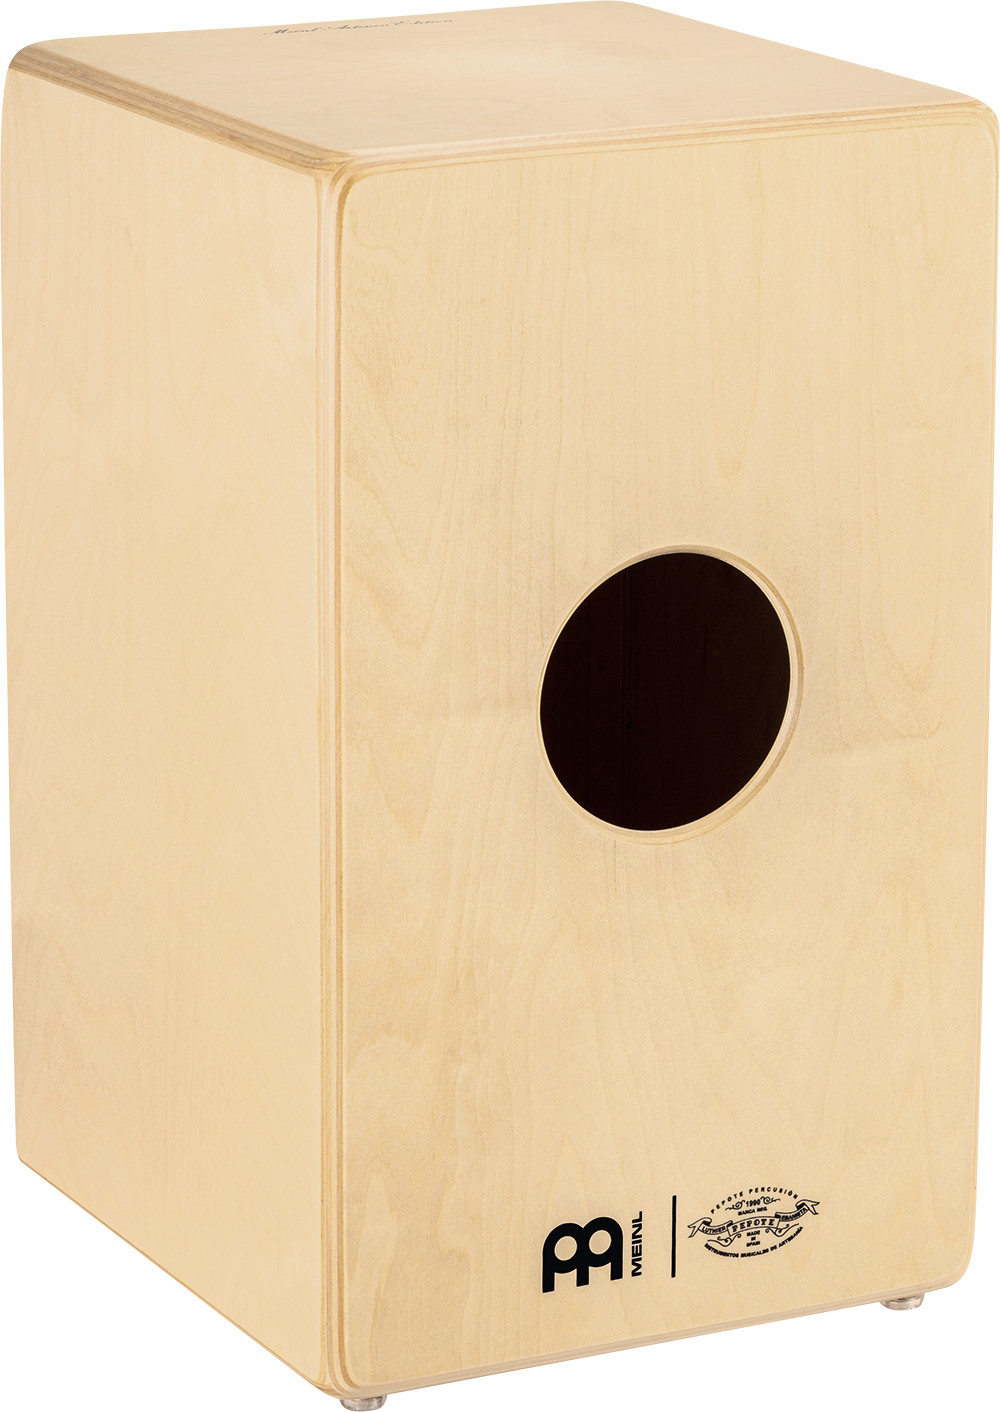 MEINL Percussion Artisan Edition Series String Cajon Tango Line - Grey  Eucalyptus (AETLGE)